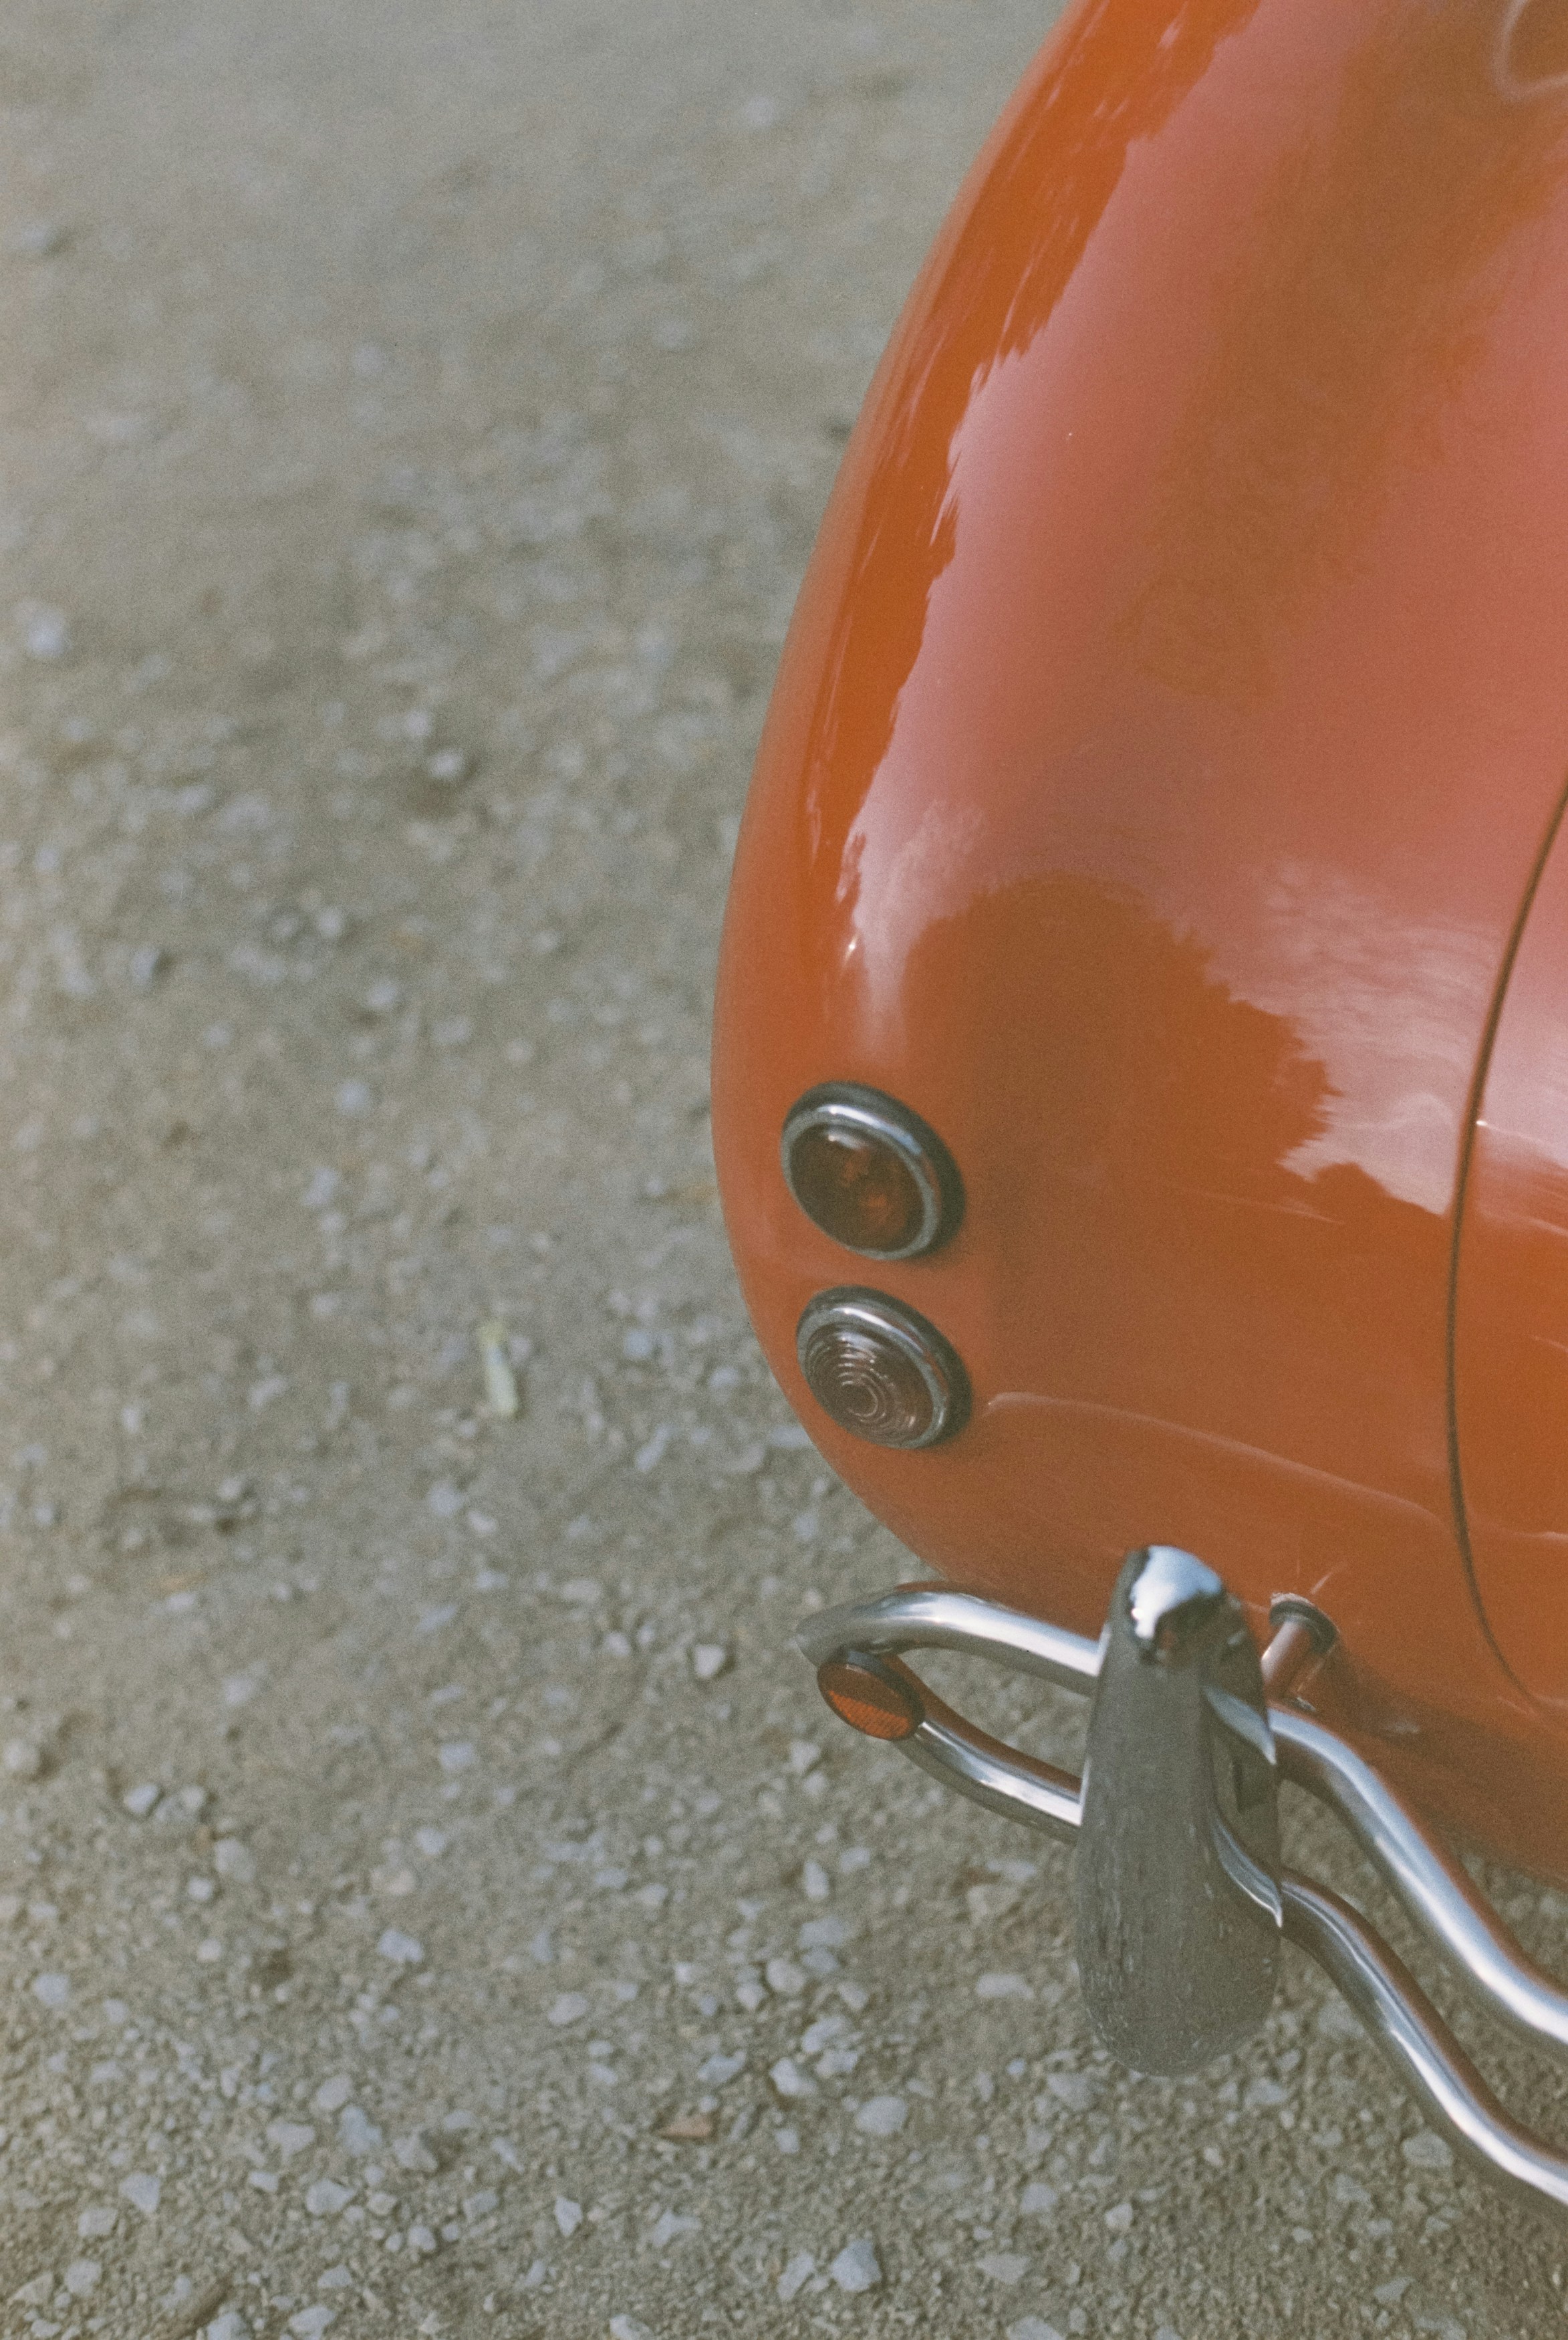 1964 AC Shelby Cobra 289 - Vintage oldtimer iconic classic car. Leica R7 (1994), Summilux-R 1.4 50mm (1983). Hi-Res analog scan by www.urbanfilmlab.com - Agfa HDC 100 (expired)